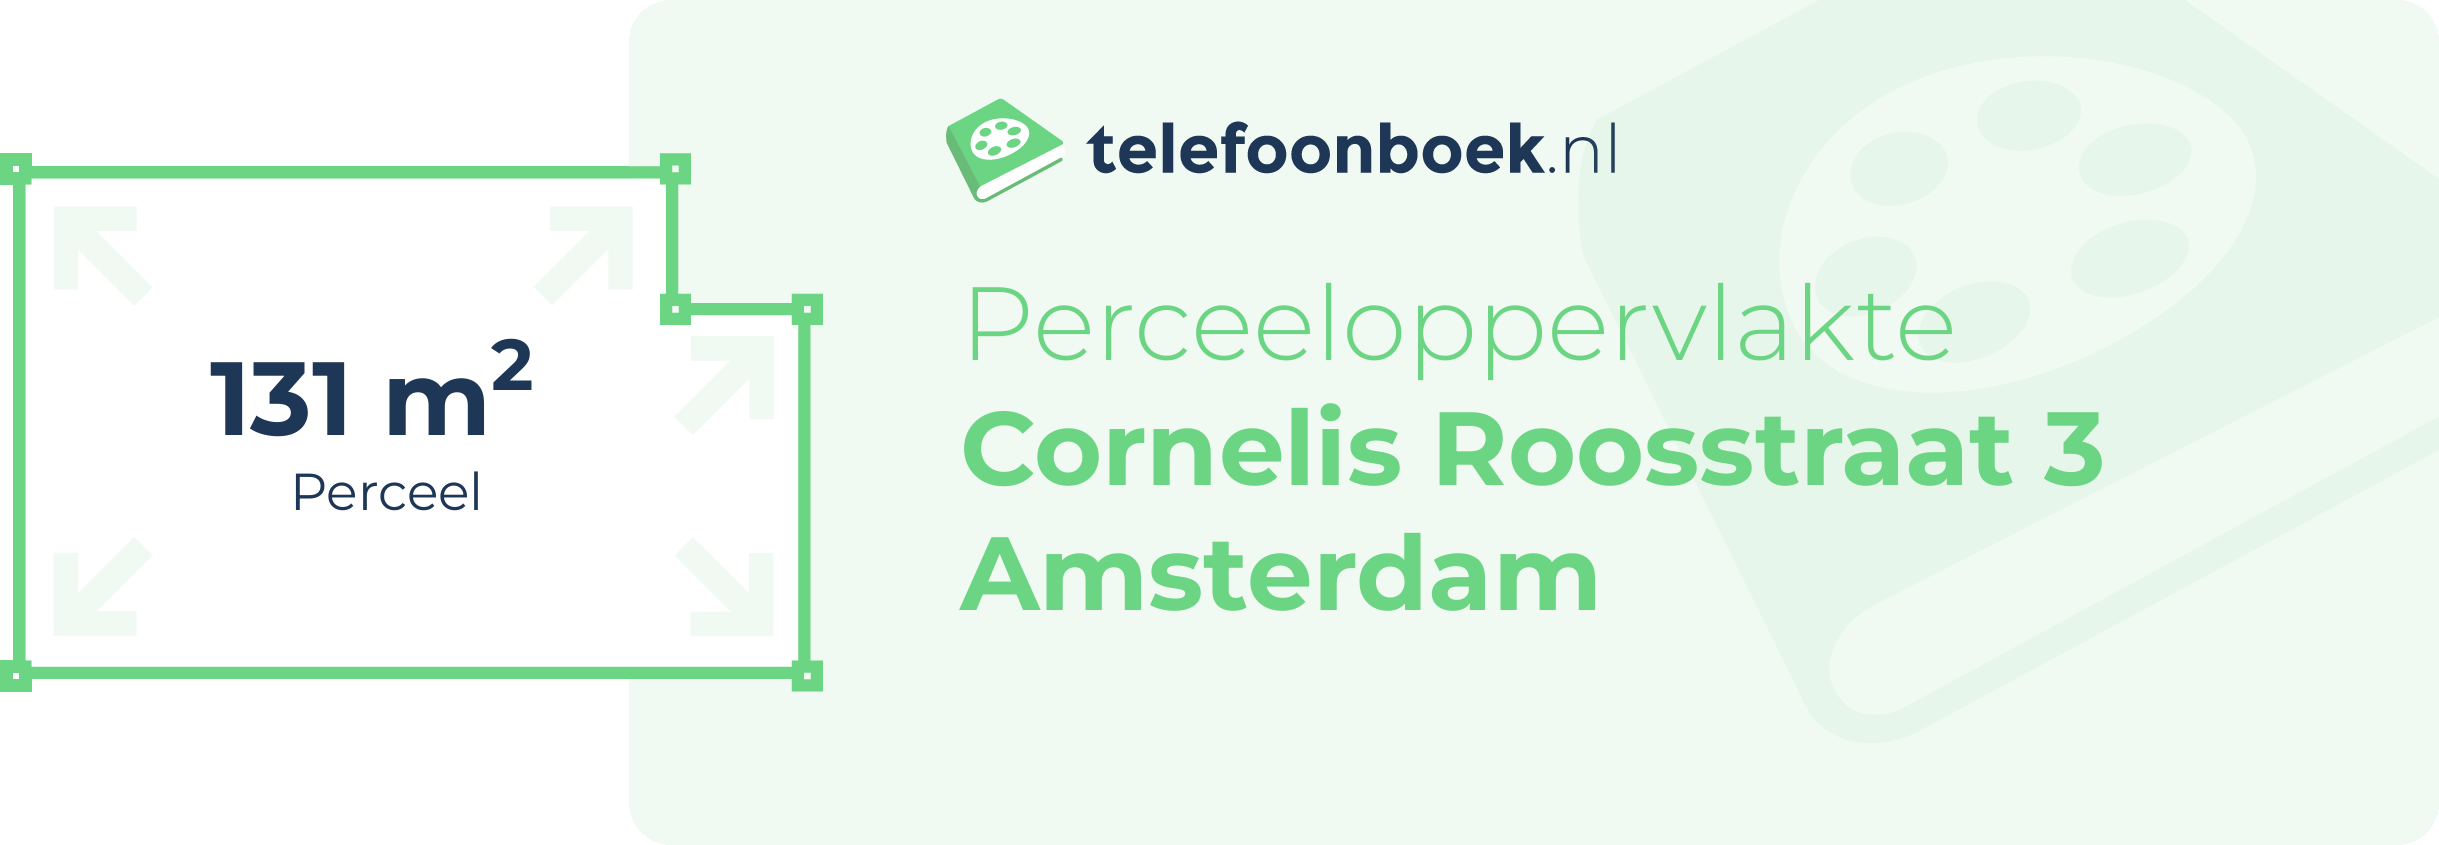 Perceeloppervlakte Cornelis Roosstraat 3 Amsterdam